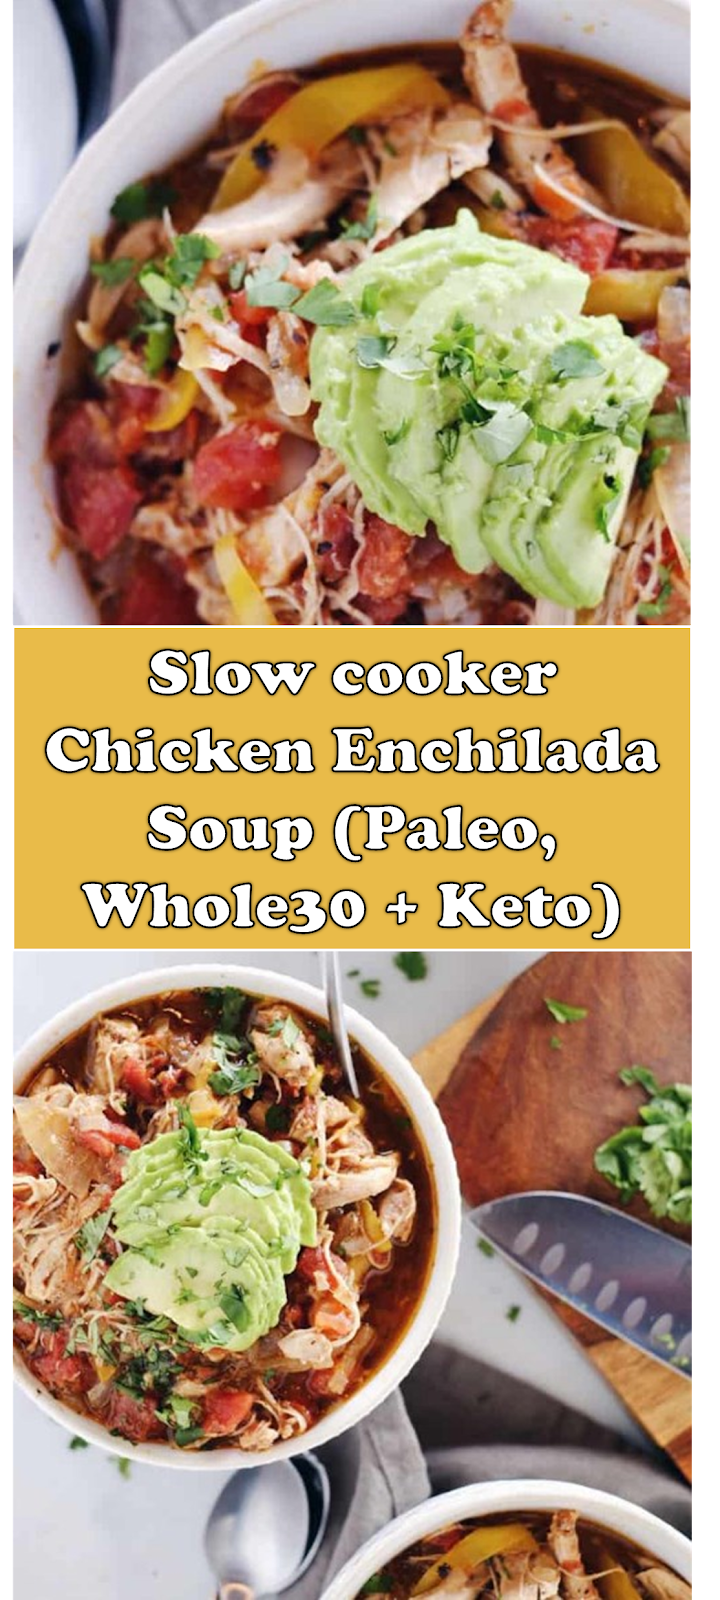 788 Reviews: #Best #Recipe >>> Slow cooker #Chicken Enchilada Soup ...